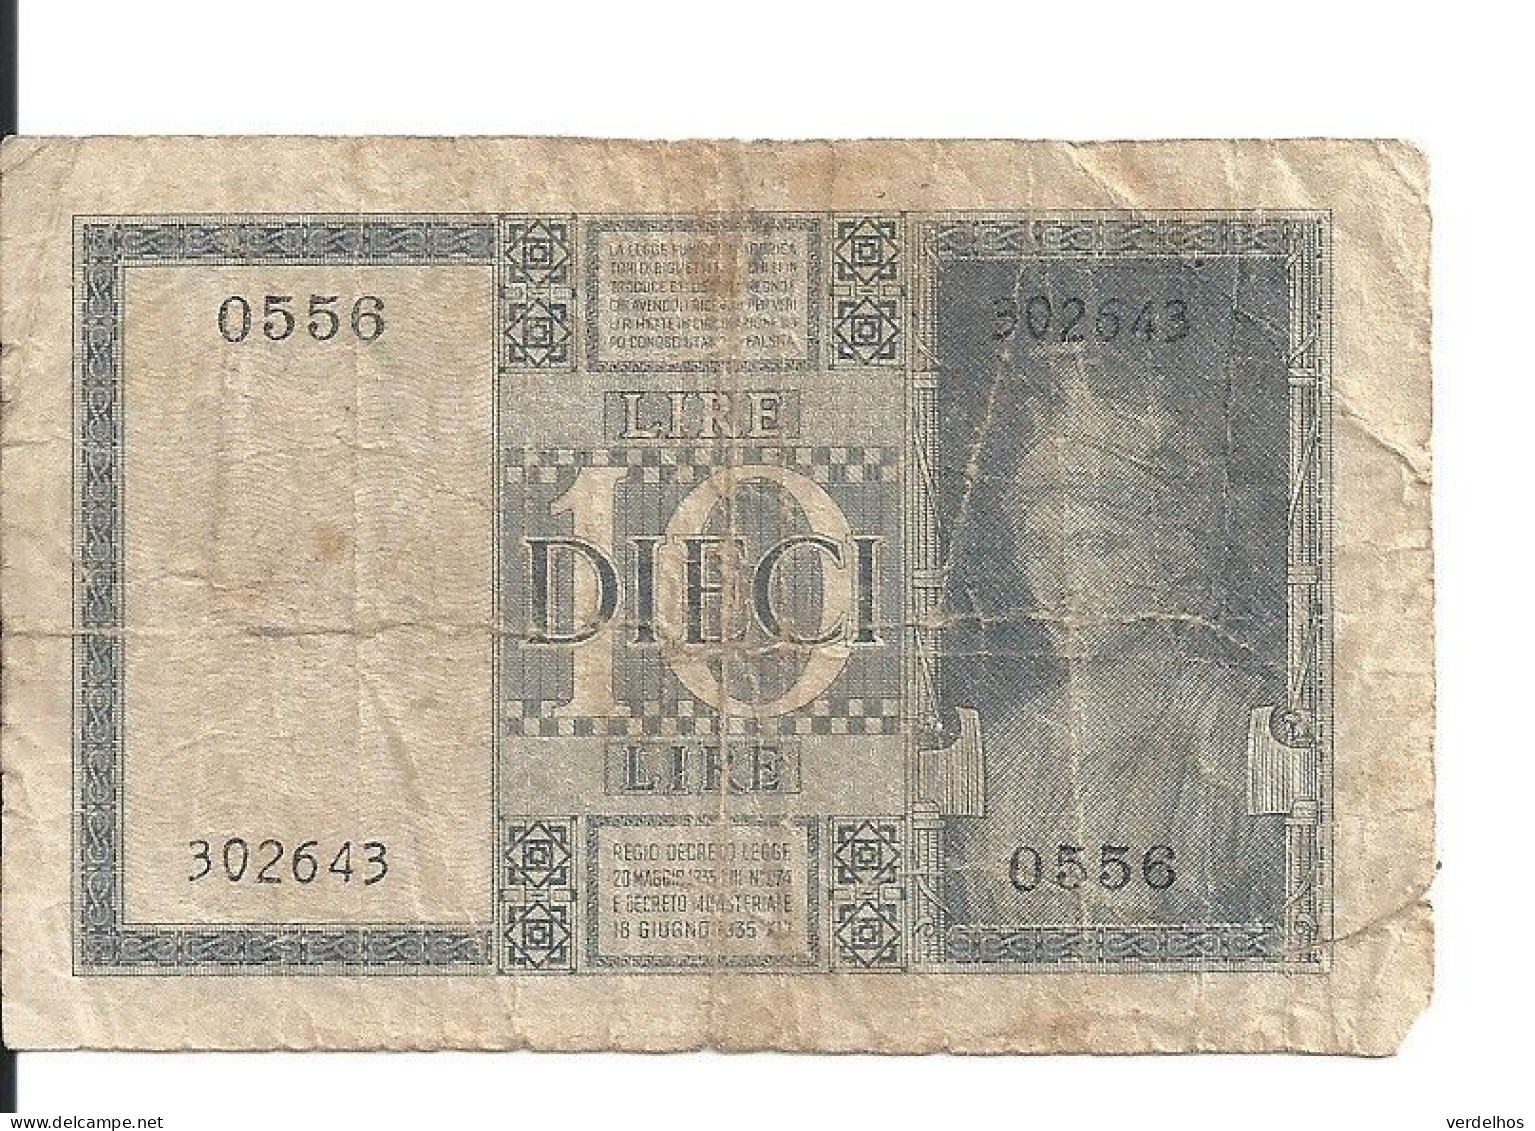 ITALIE 10 LIRE 1939-44 VG+ P 25 C - Regno D'Italia – 10 Lire